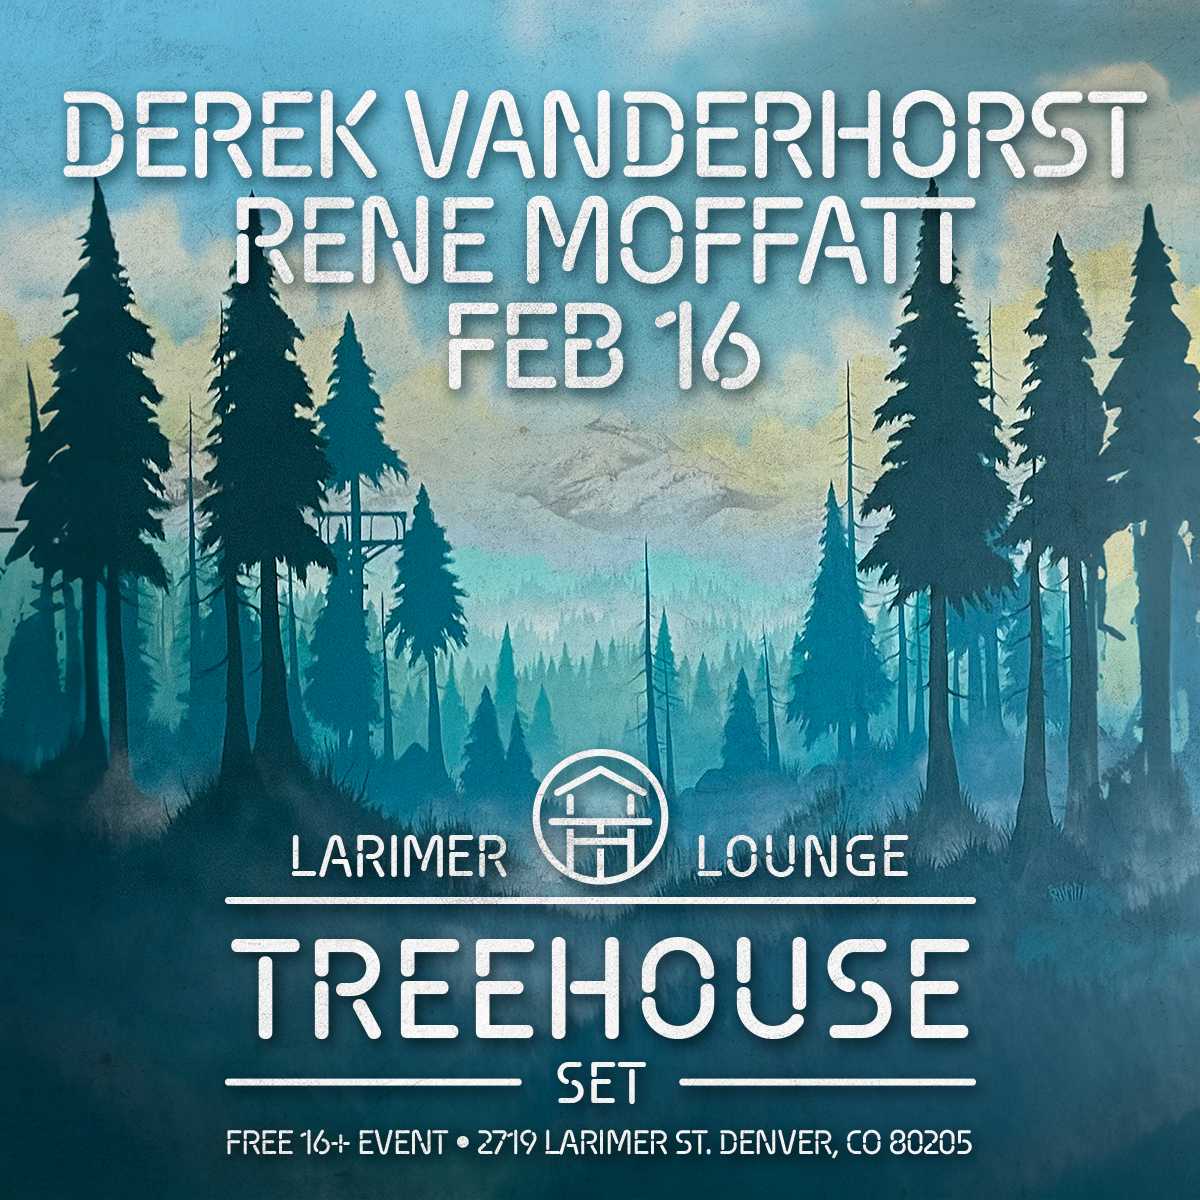 Heritage Larimer Vanderhorst - Since Set Moffatt Treehouse Derek (FREE RiNo\'s Indie EVENT) Lounge Rene | & Rock 2002 - Club